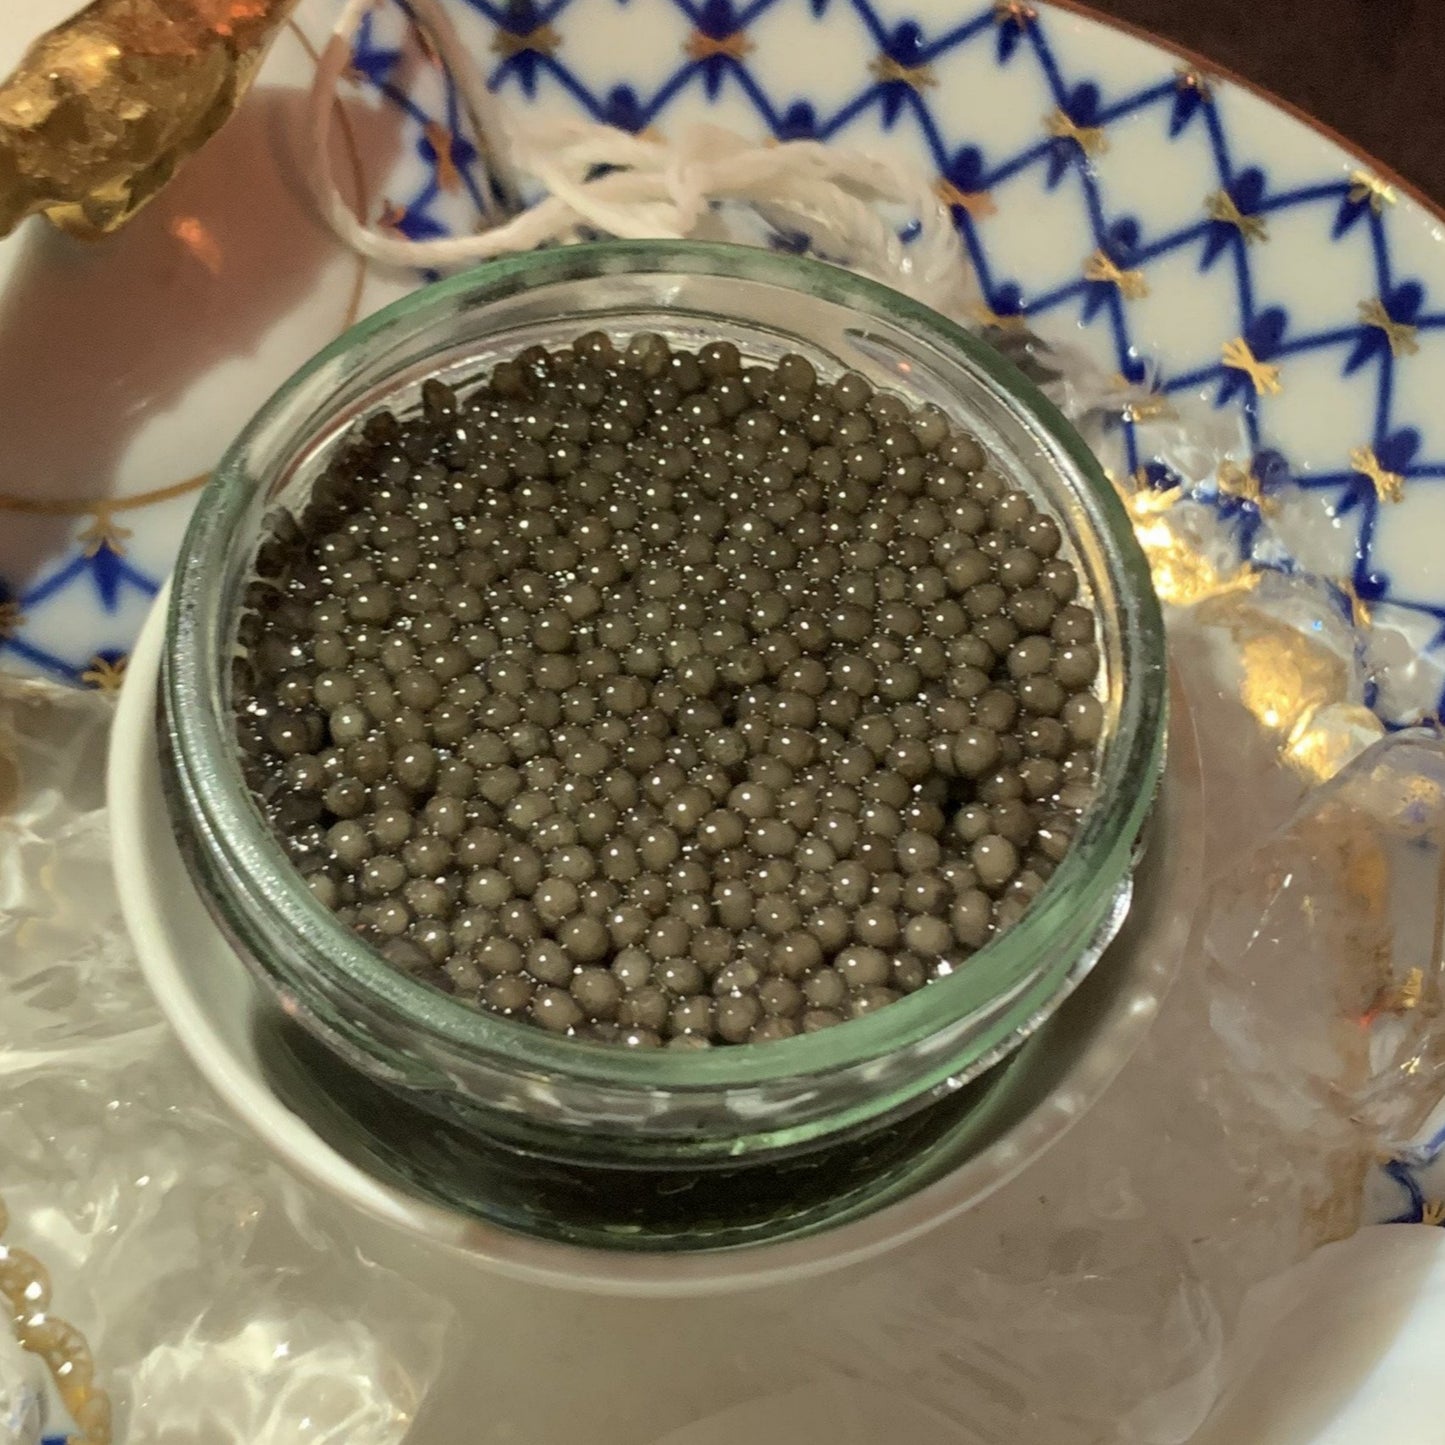 Iranian Imperial Beluga Caviar 30gm and Atlas Handcrafted Vodka